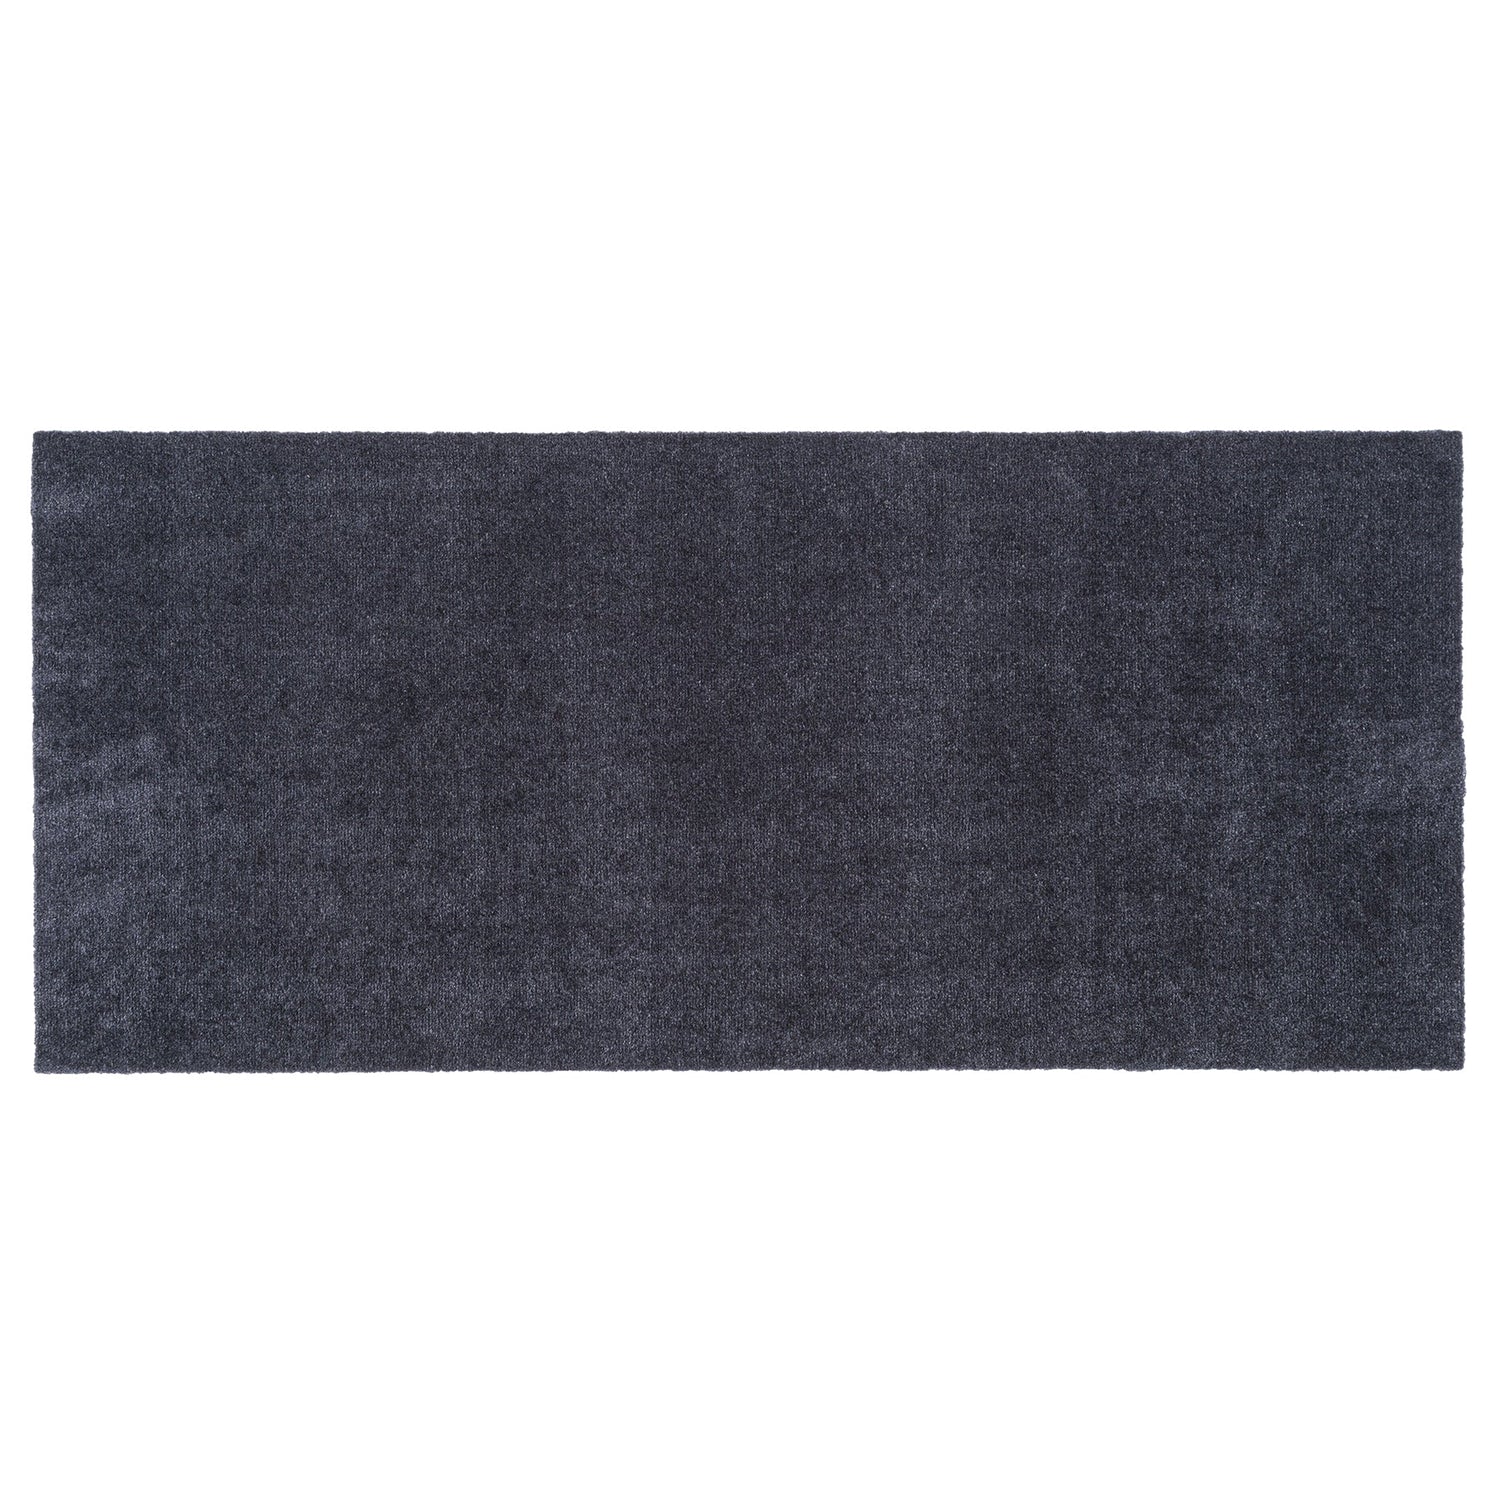 Blanket/tinha 67 x 150 cm - Uni Color/Gray